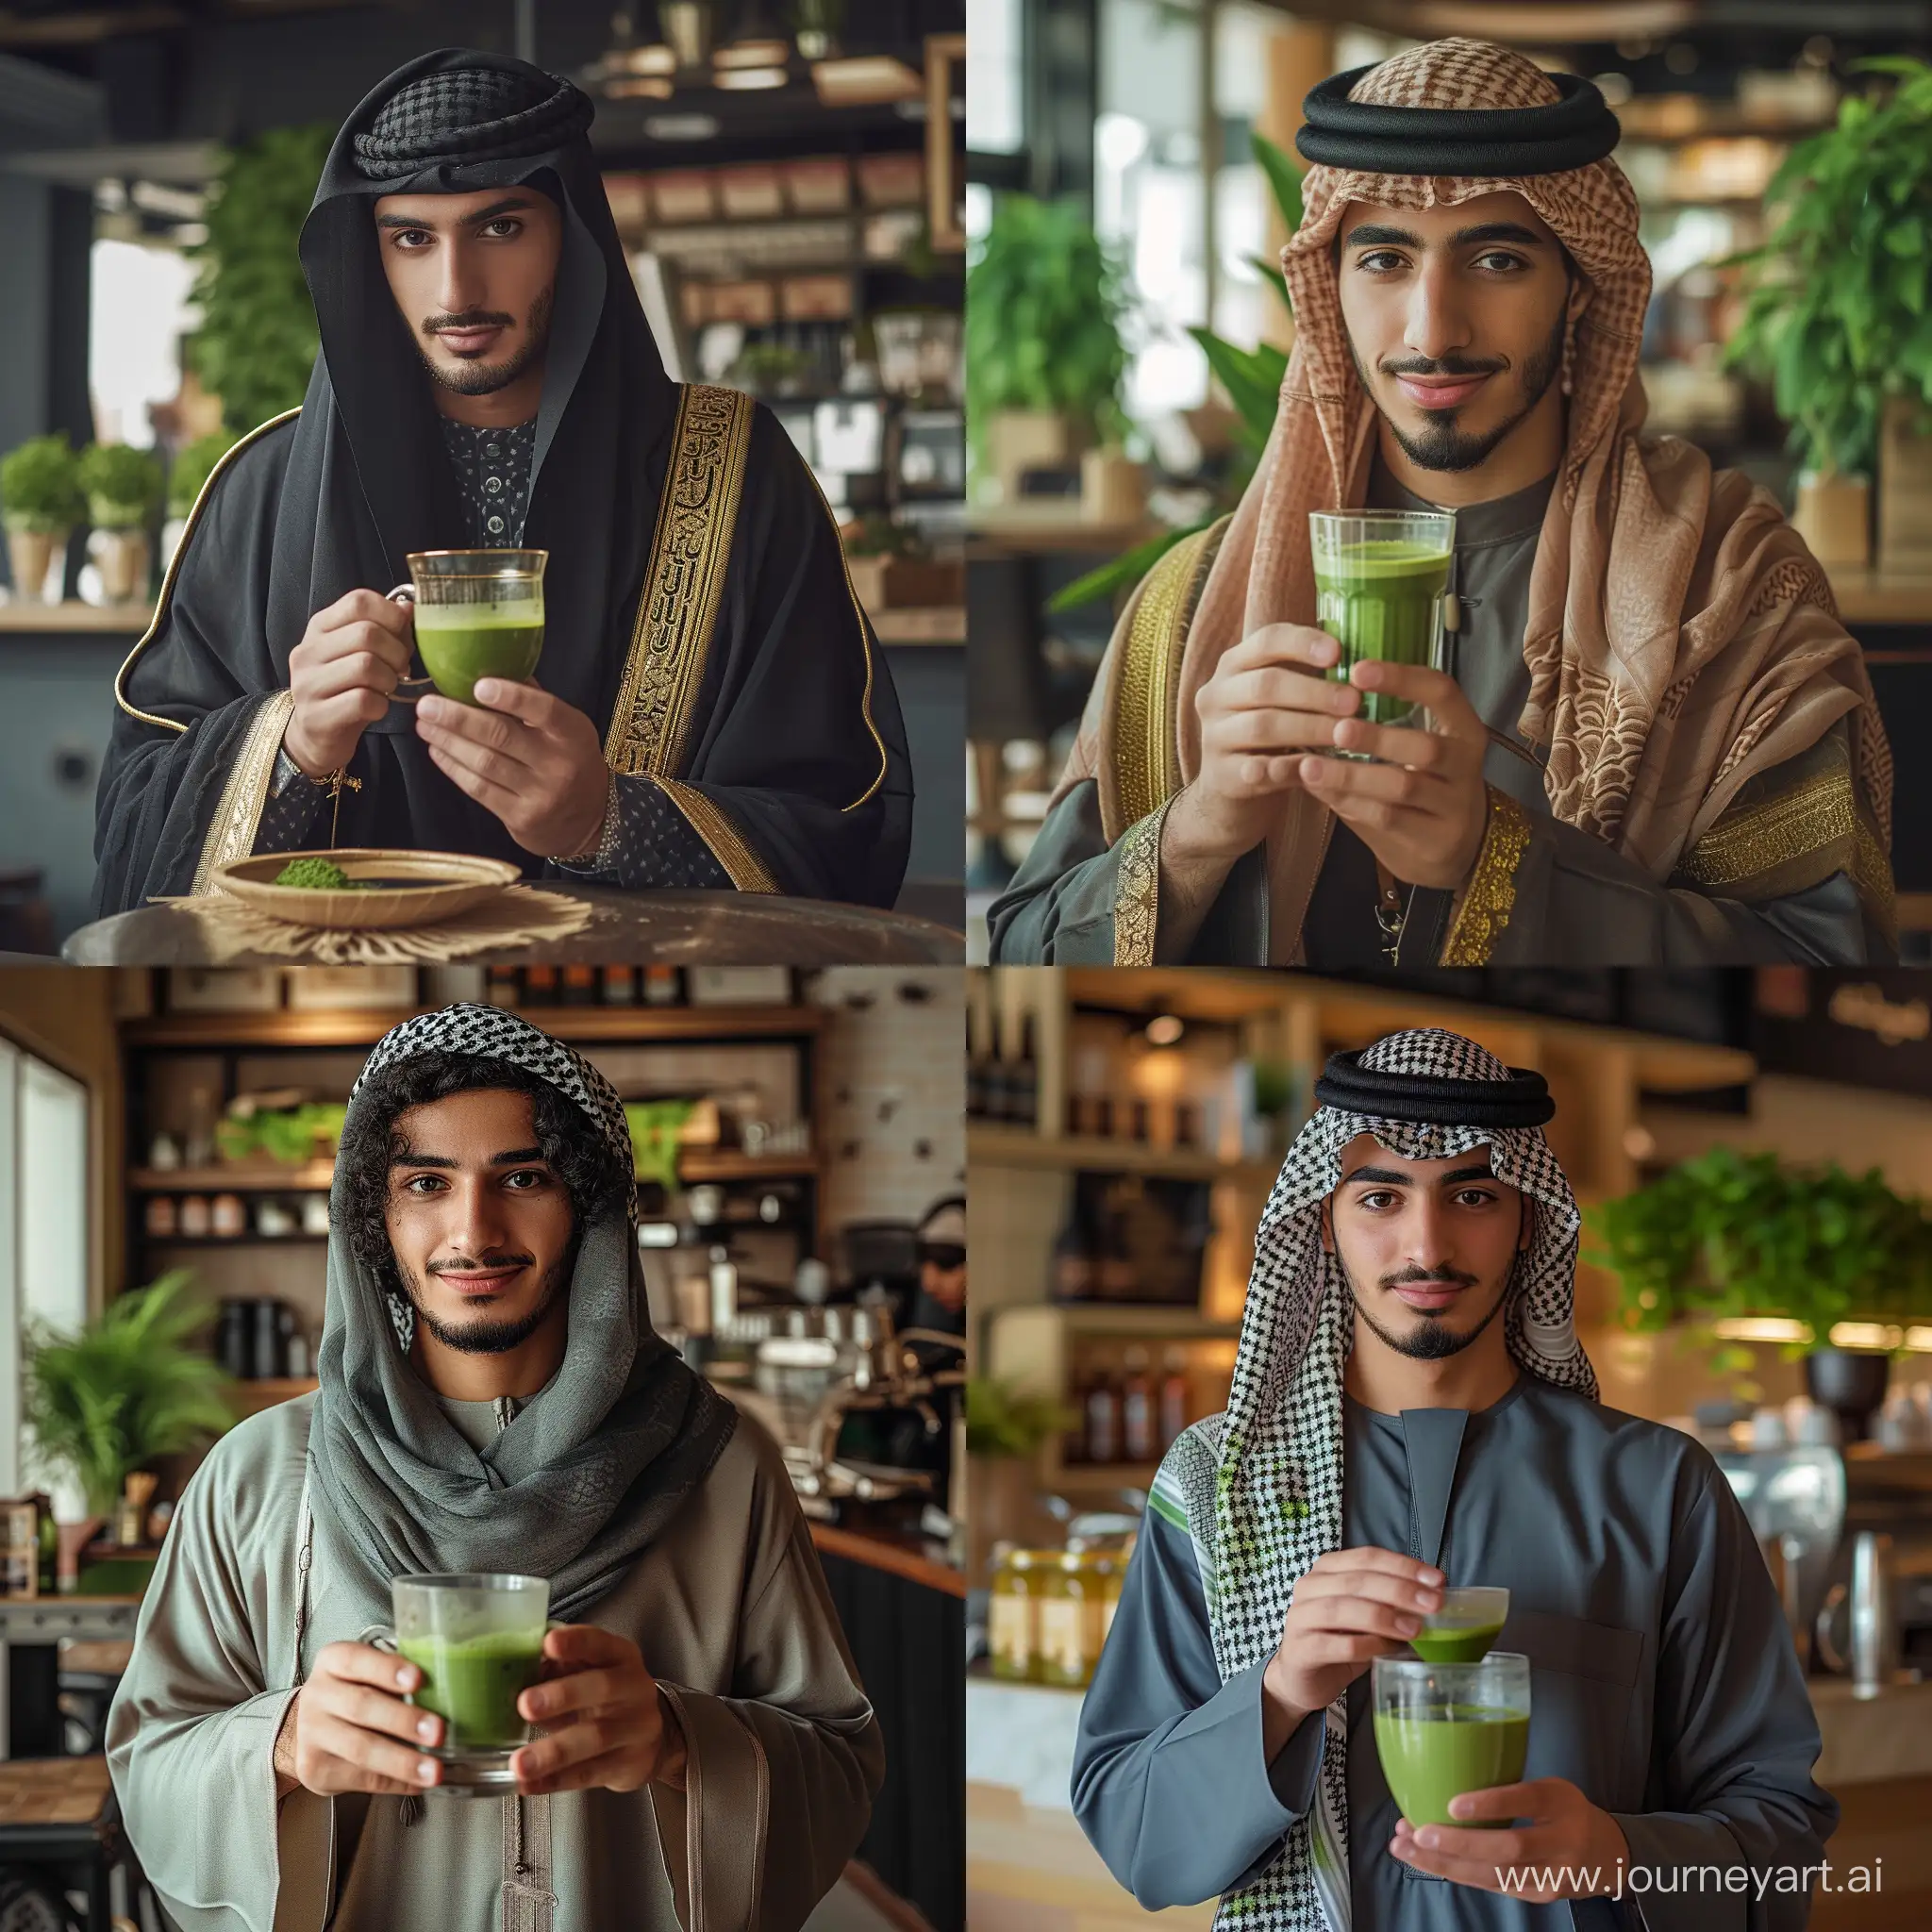 Arabic-Dressed-Man-Enjoying-Matcha-Tea-in-Cafe